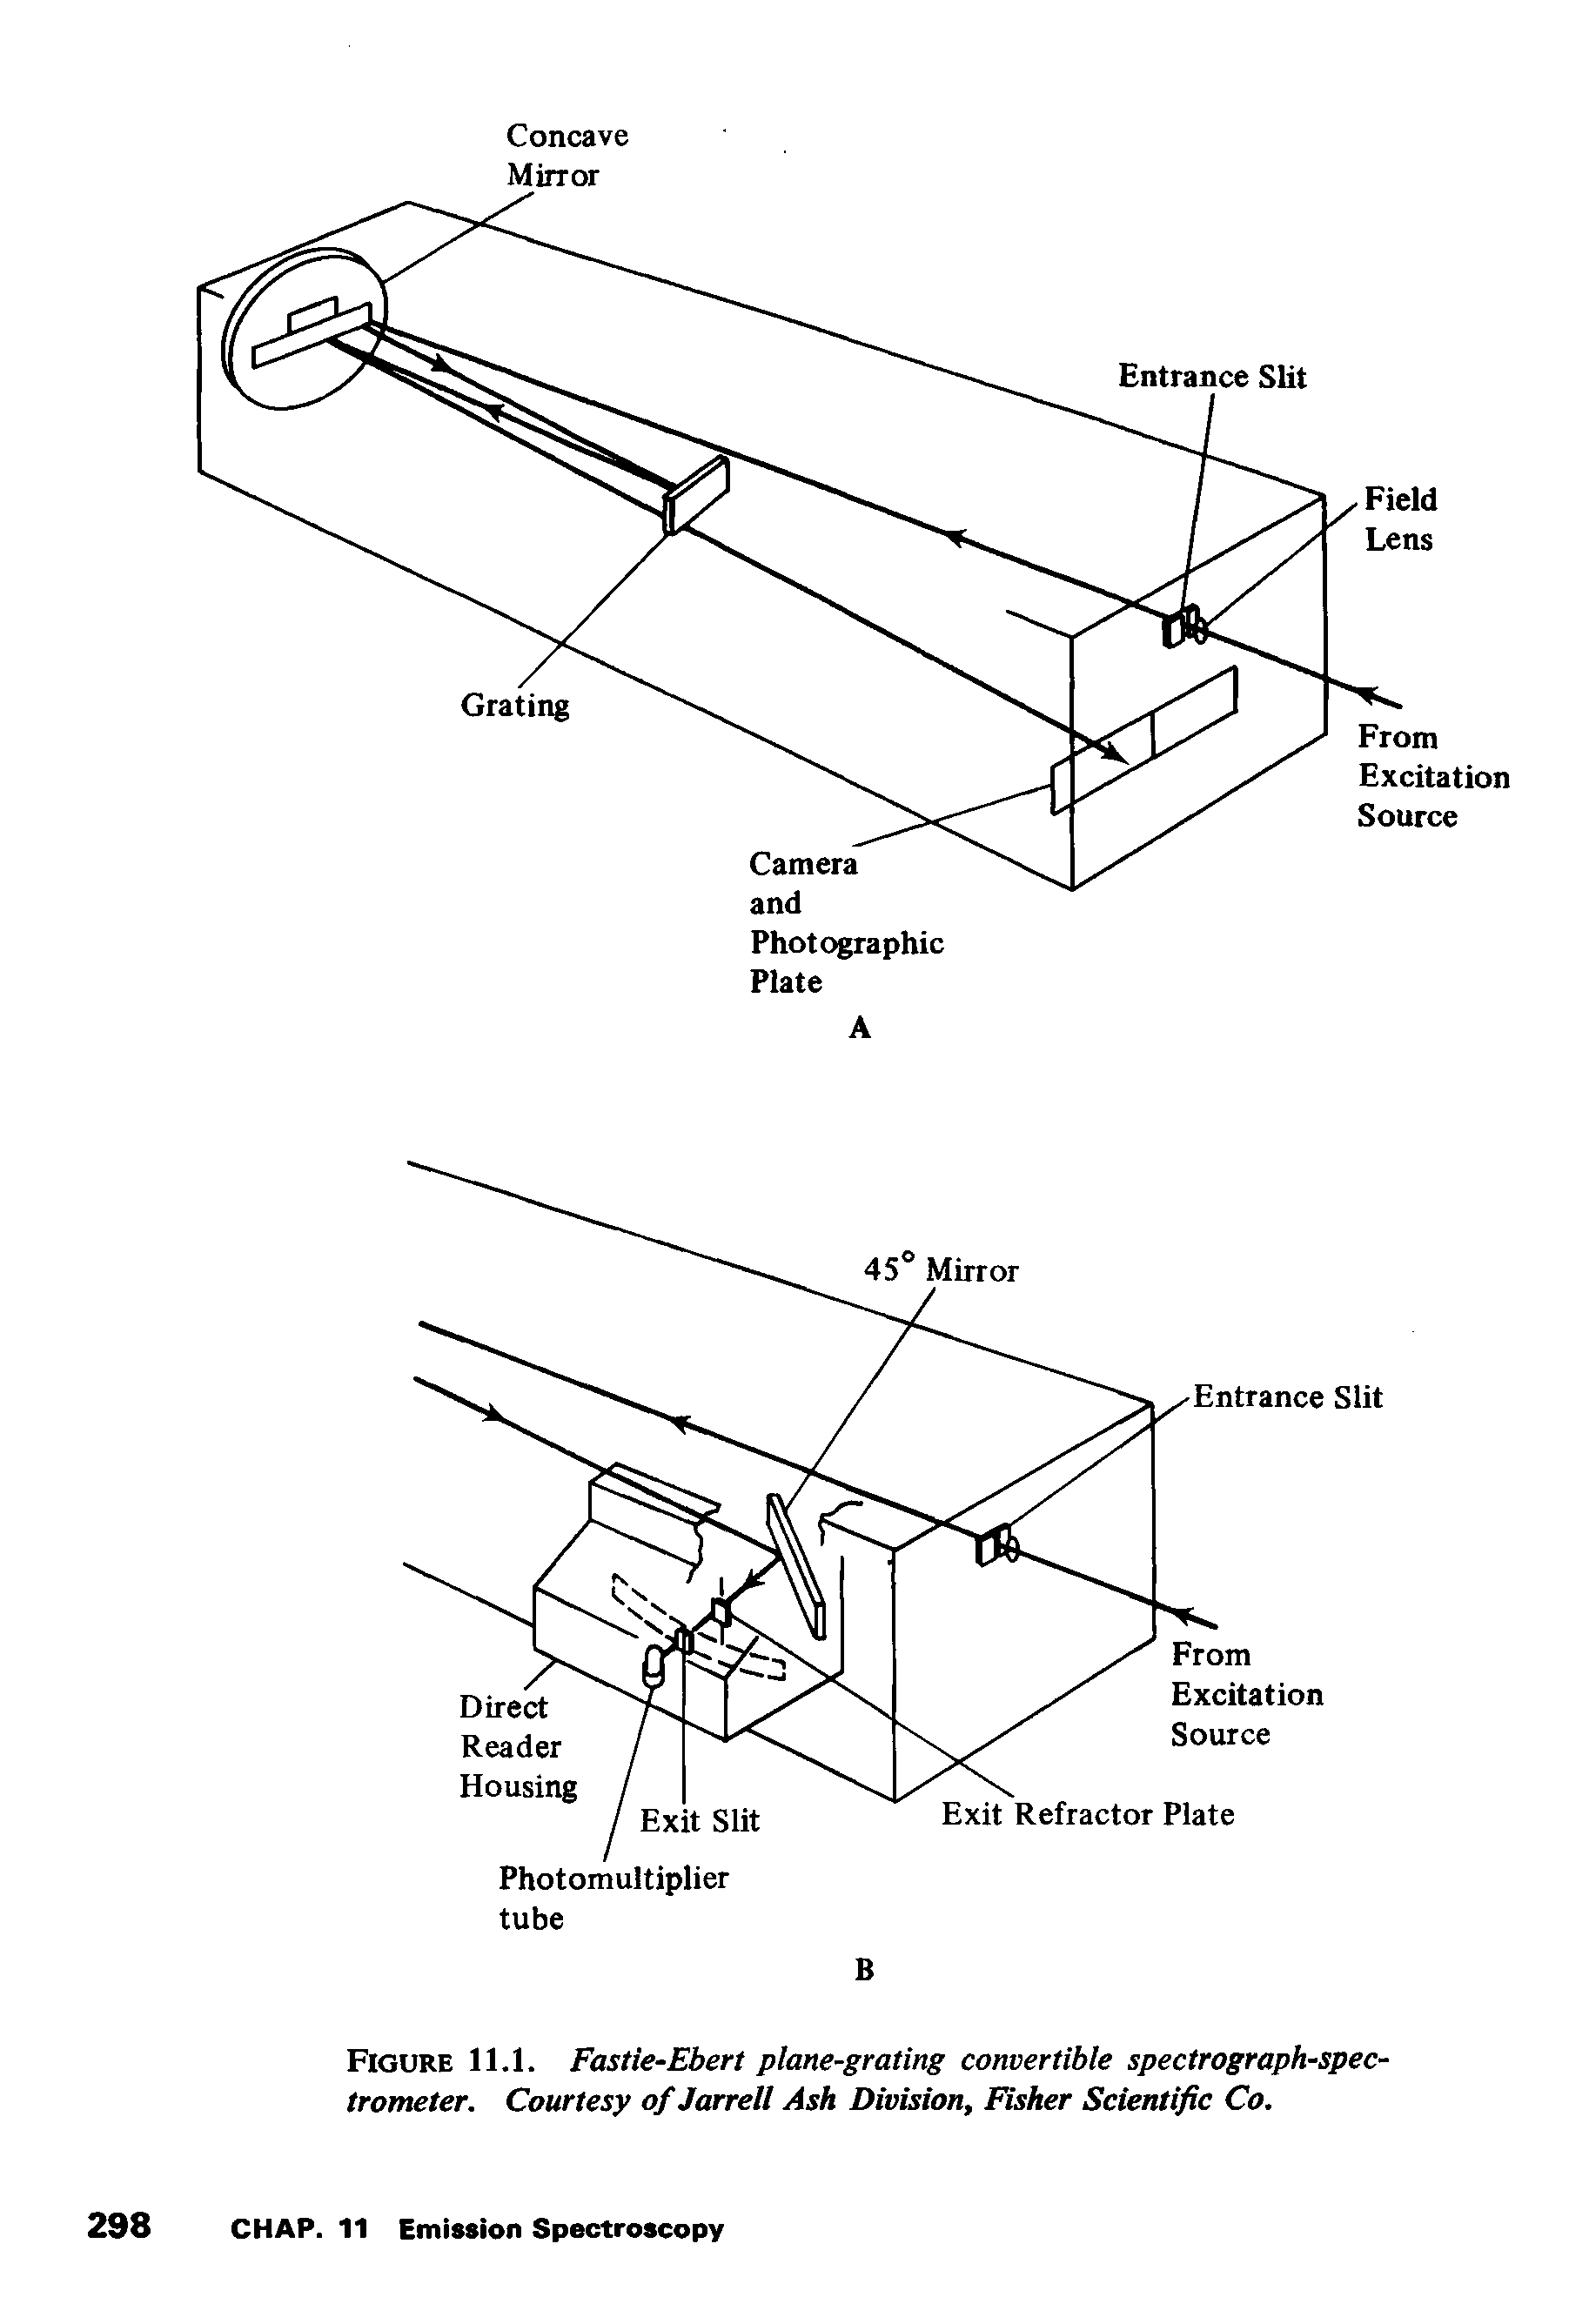 Figure 11.1. Fastie-Ebert plane-grating convertible spectrograph-spectrometer. Courtesy of Jarrell Ash Division, Fisher Scientific Co.